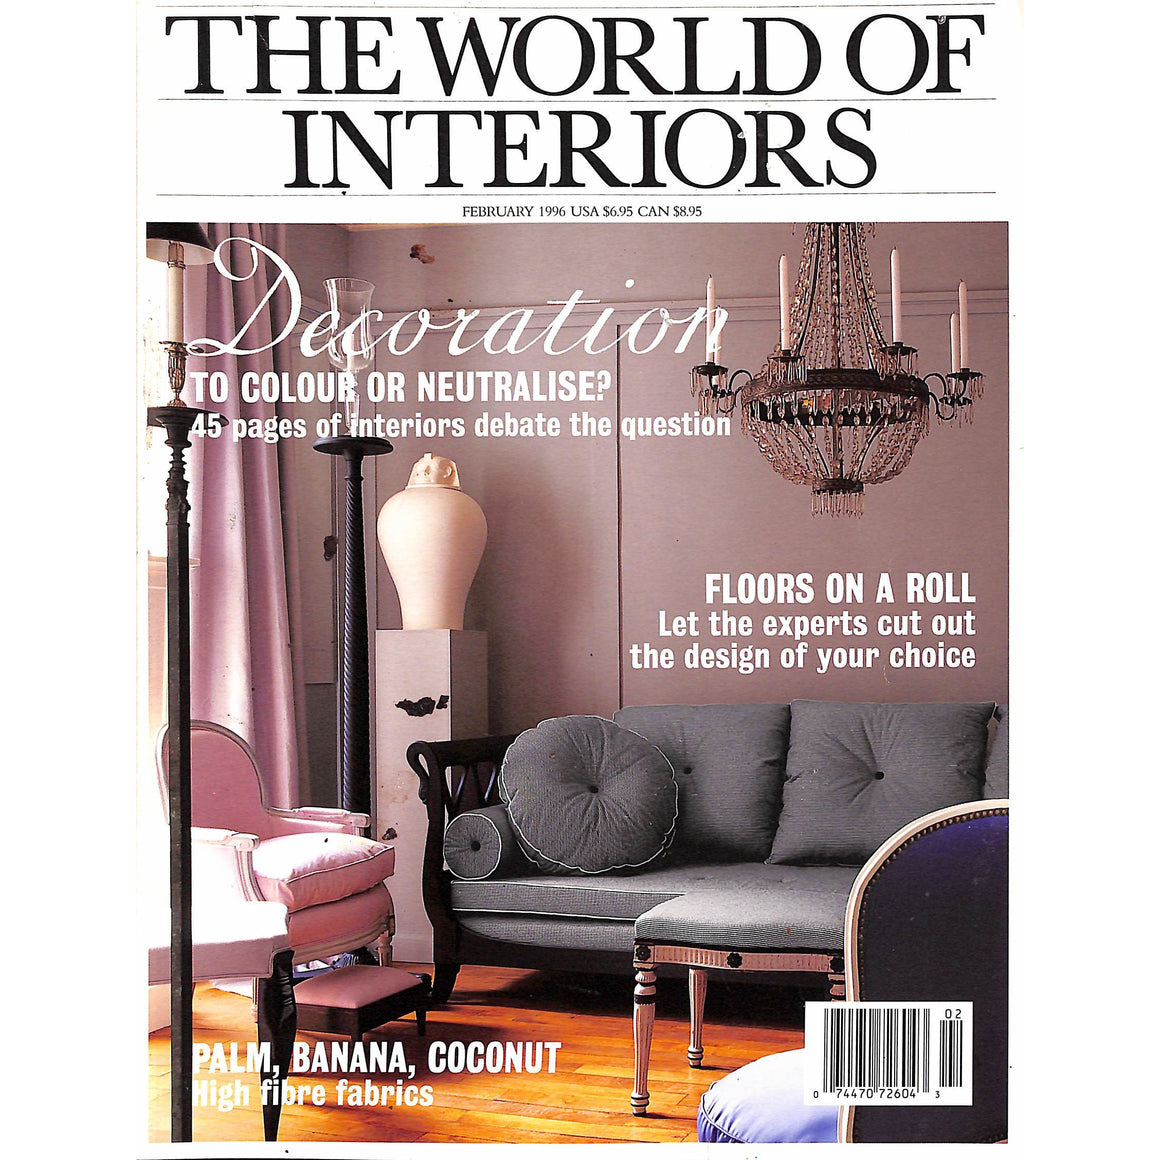 "The World Of Interiors" February 1996